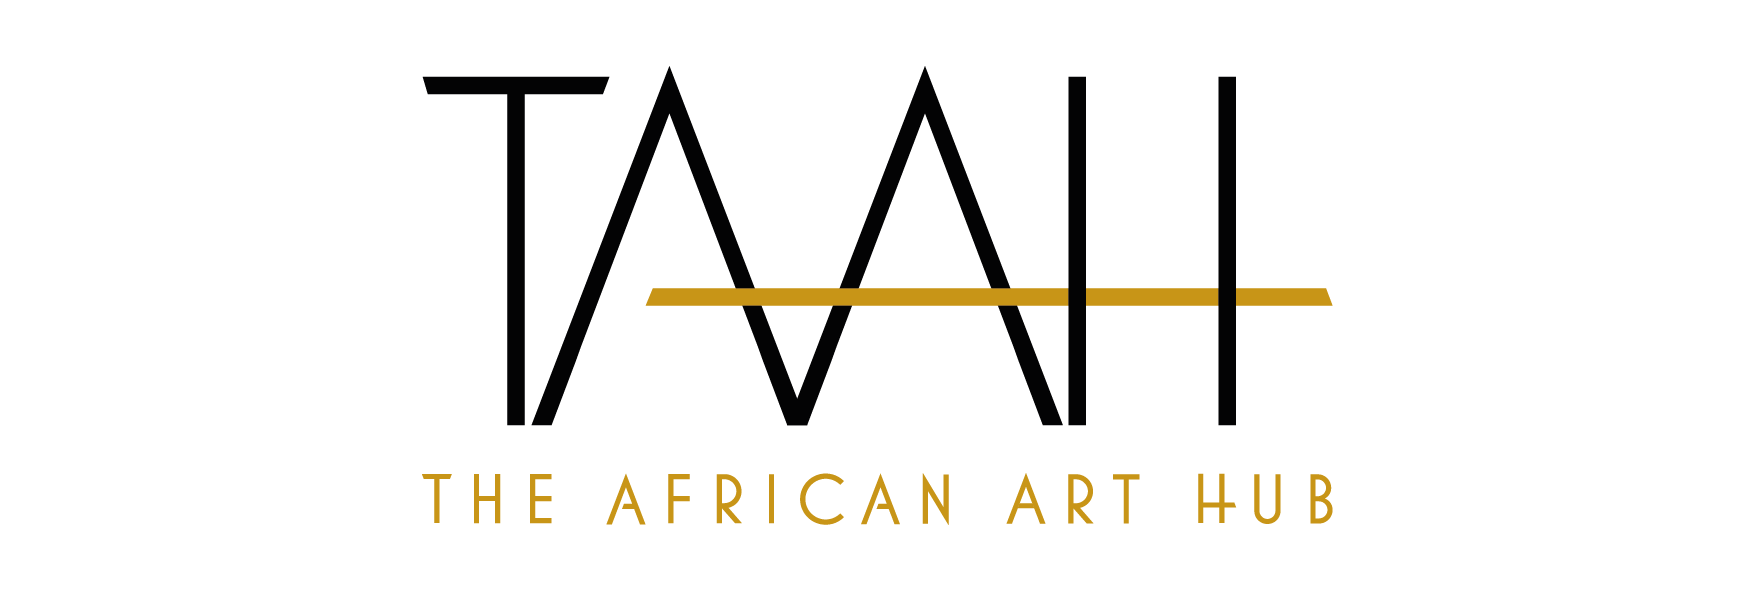 The African Art Hub